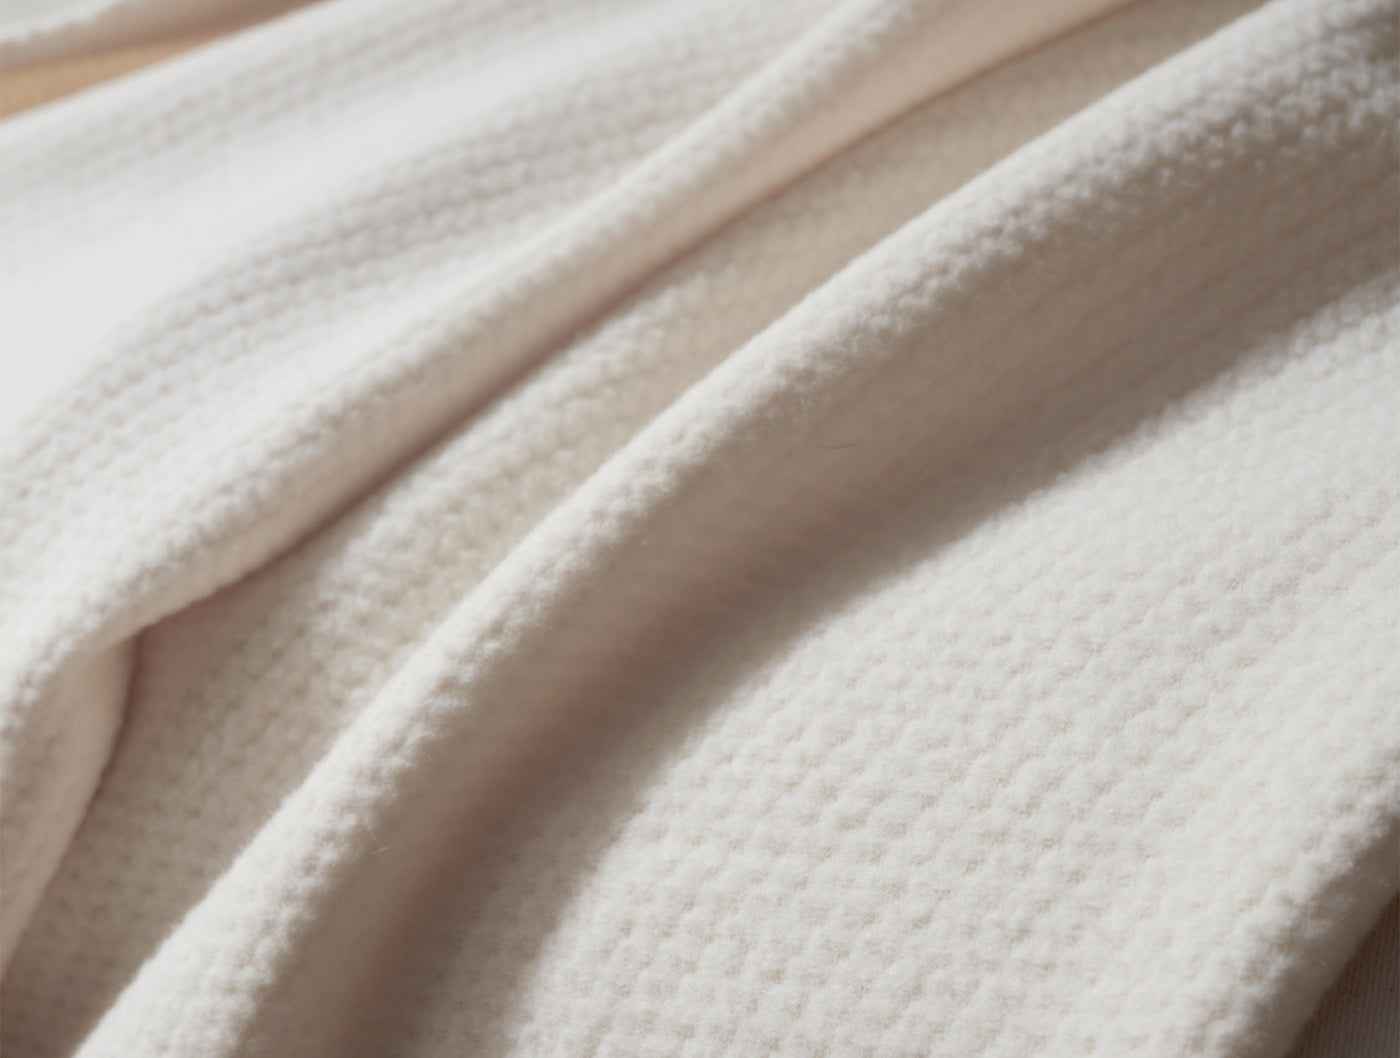 Coyuchi: Sequoia Washable Organic Cotton & Wool Blanket